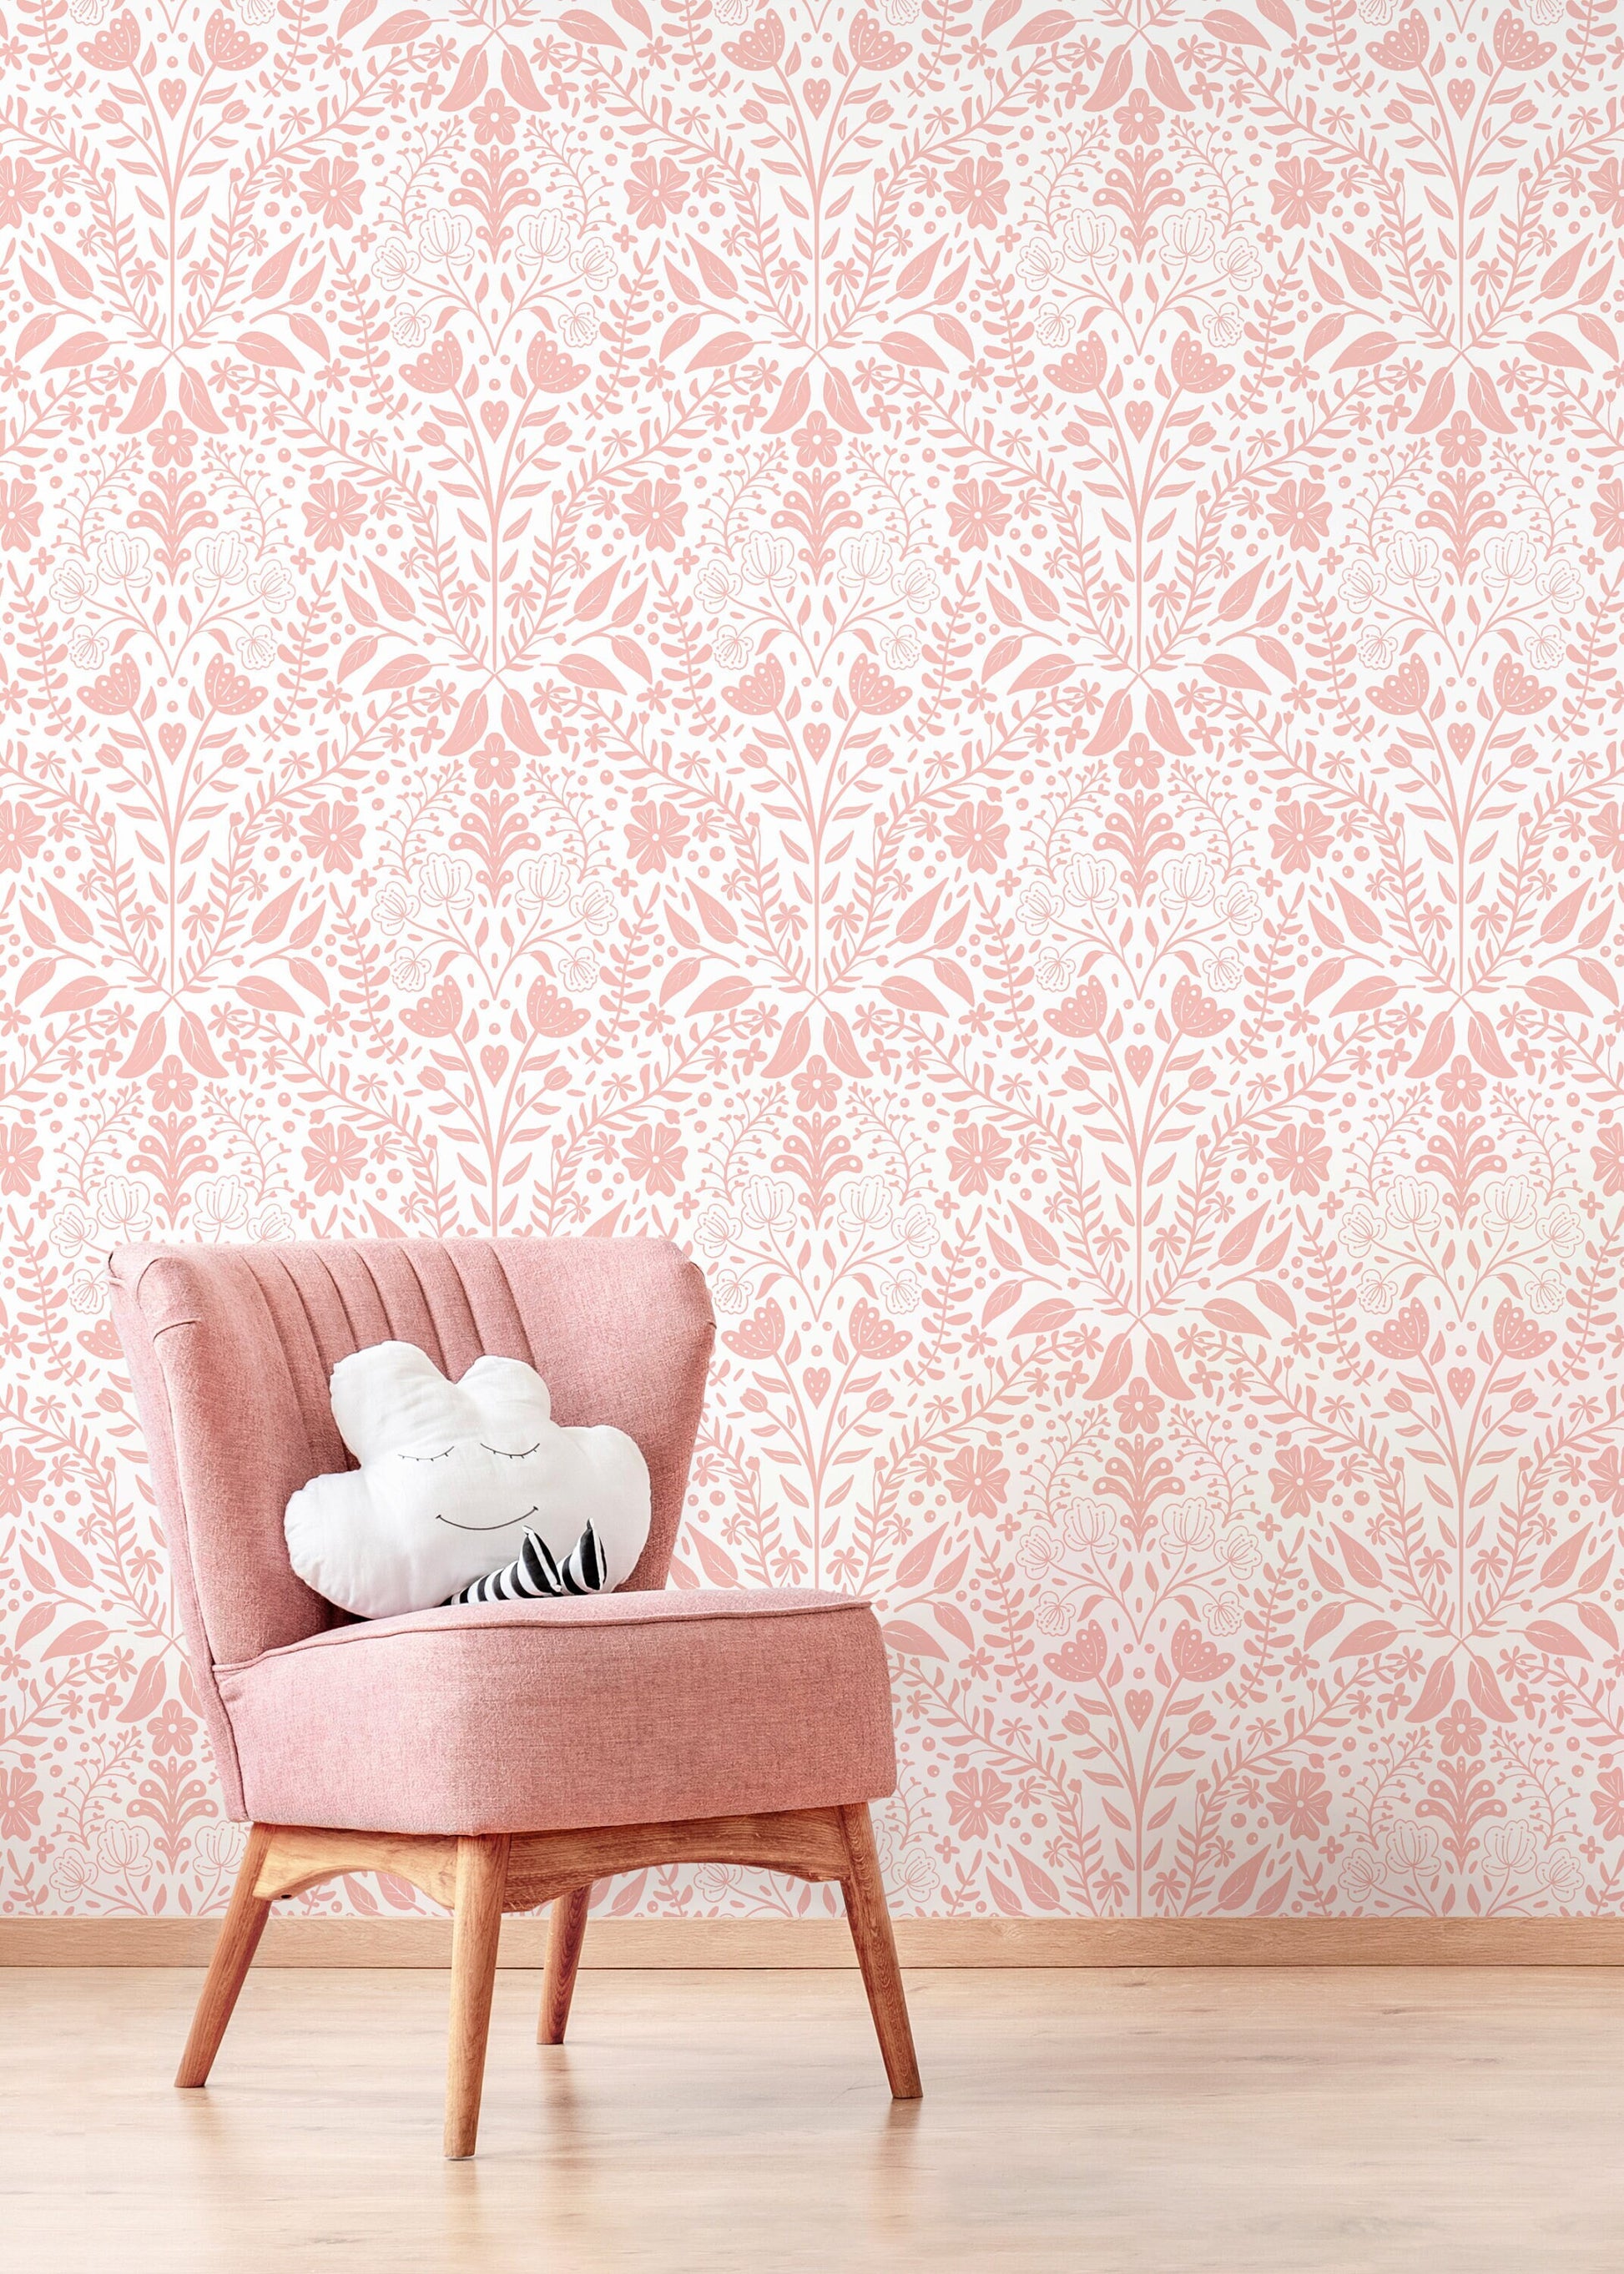 Pink Boho Floral Wallpaper / Peel and Stick Wallpaper Removable Wallpaper Home Decor Wall Art Wall Decor Room Decor - D040